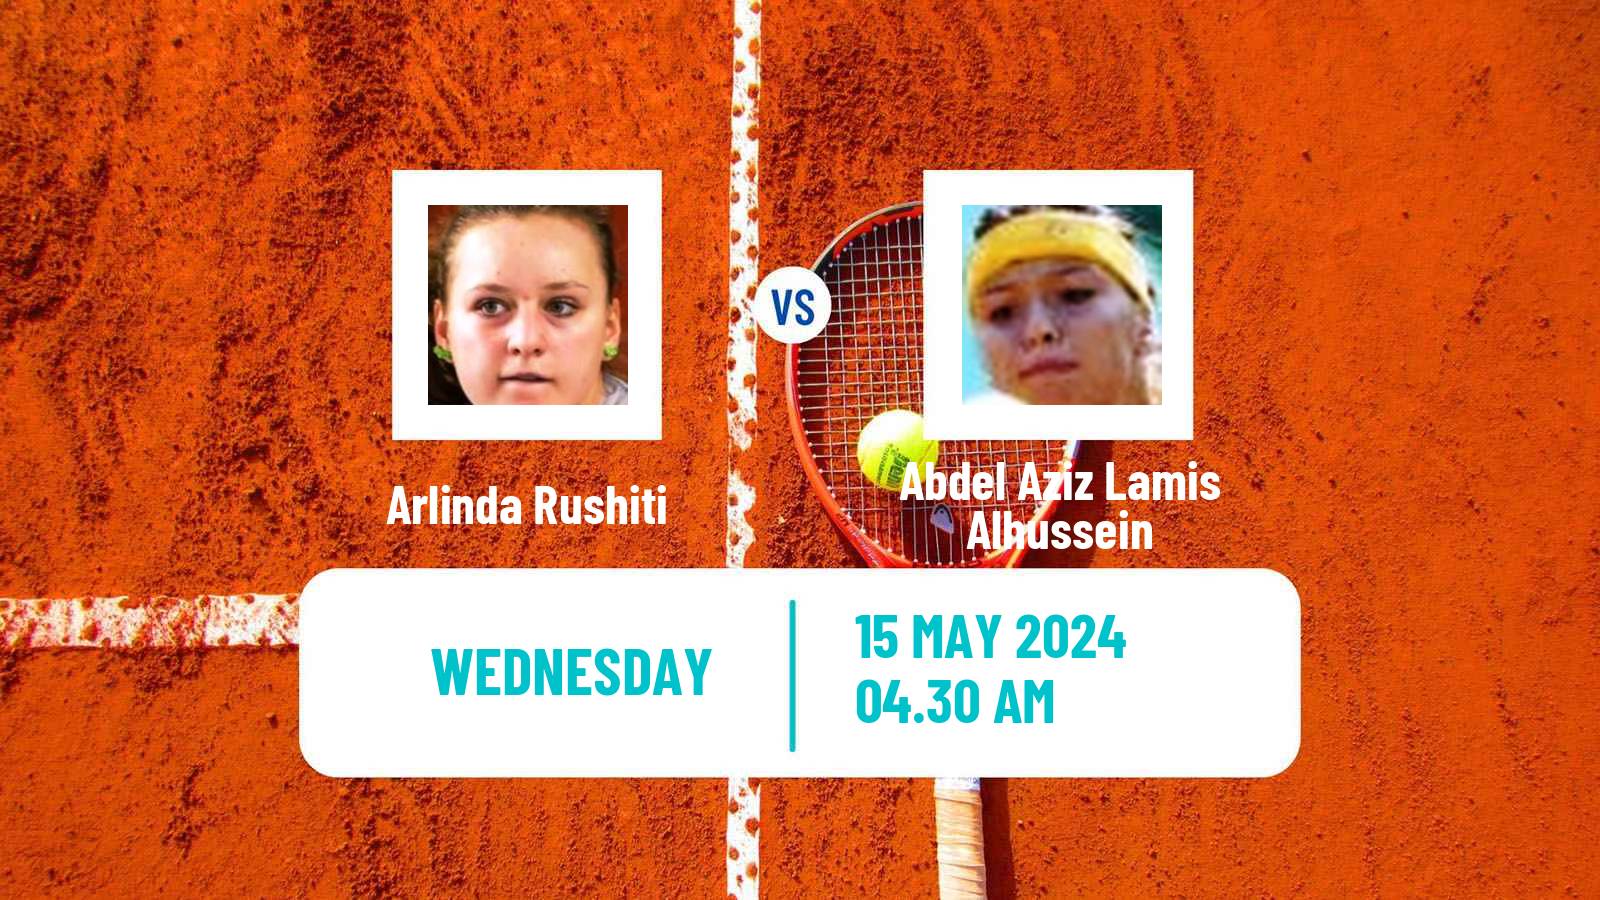 Tennis ITF W15 Monastir 18 Women Arlinda Rushiti - Abdel Aziz Lamis Alhussein